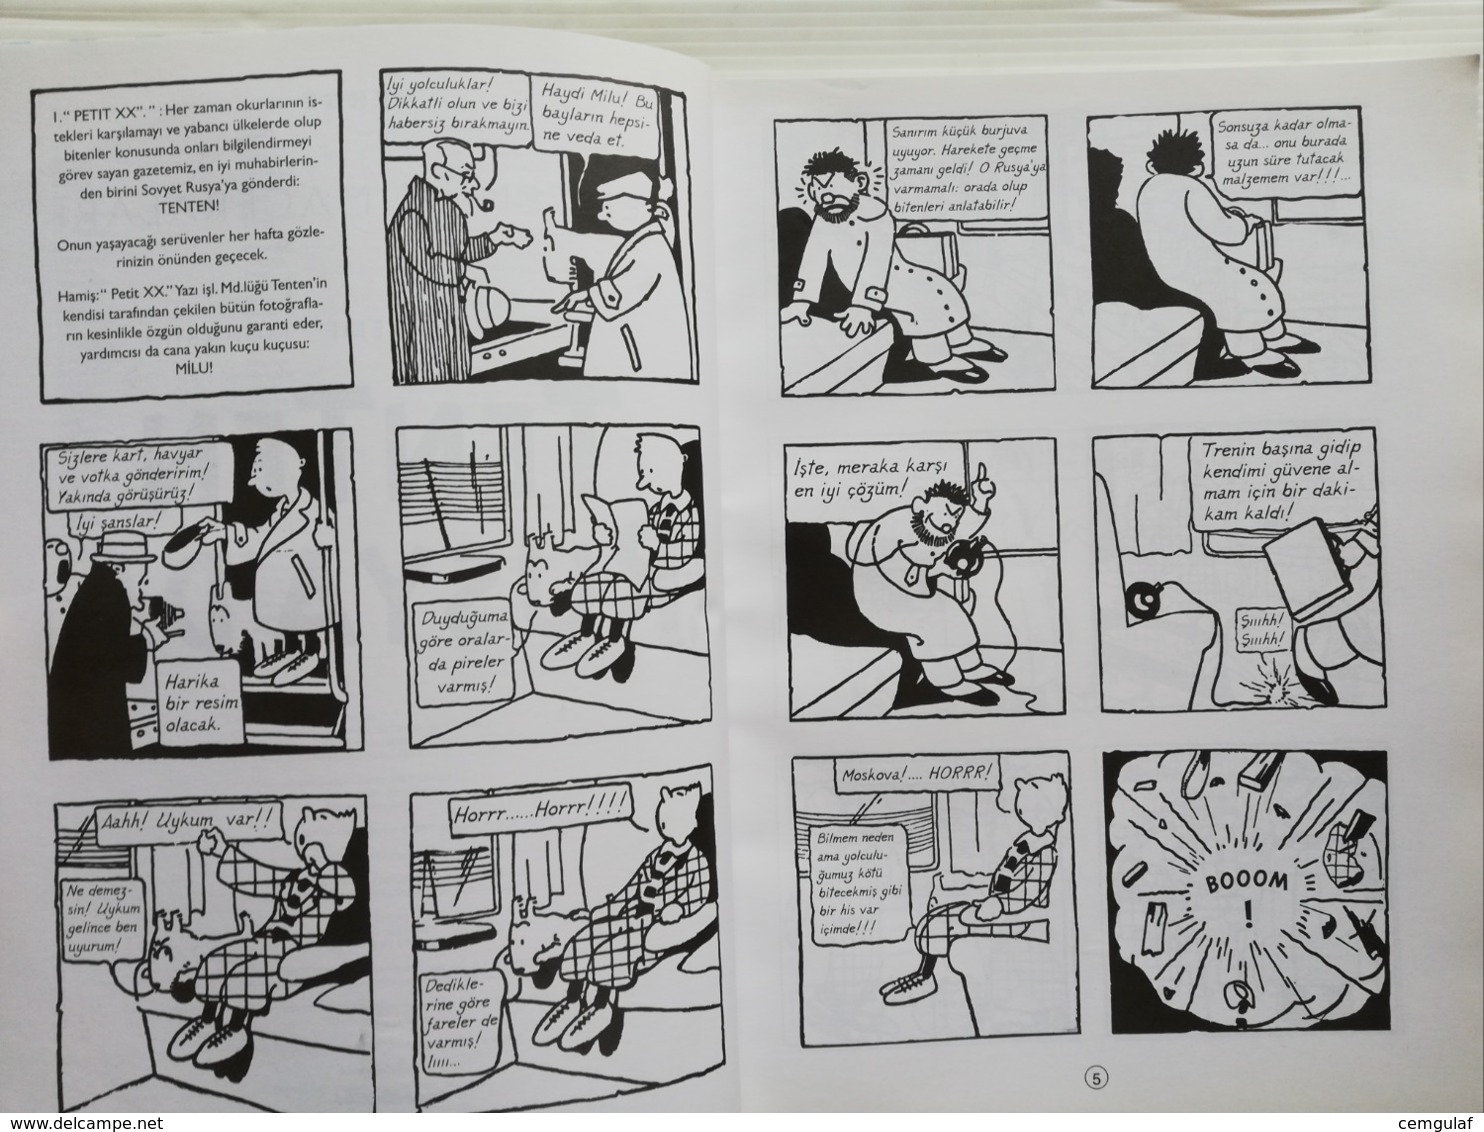 Tintin  TURKISH EDITION/ Adventures Of TINTIN " TENTEN IN RUSSIA" - Fumetti & Mangas (altri Lingue)